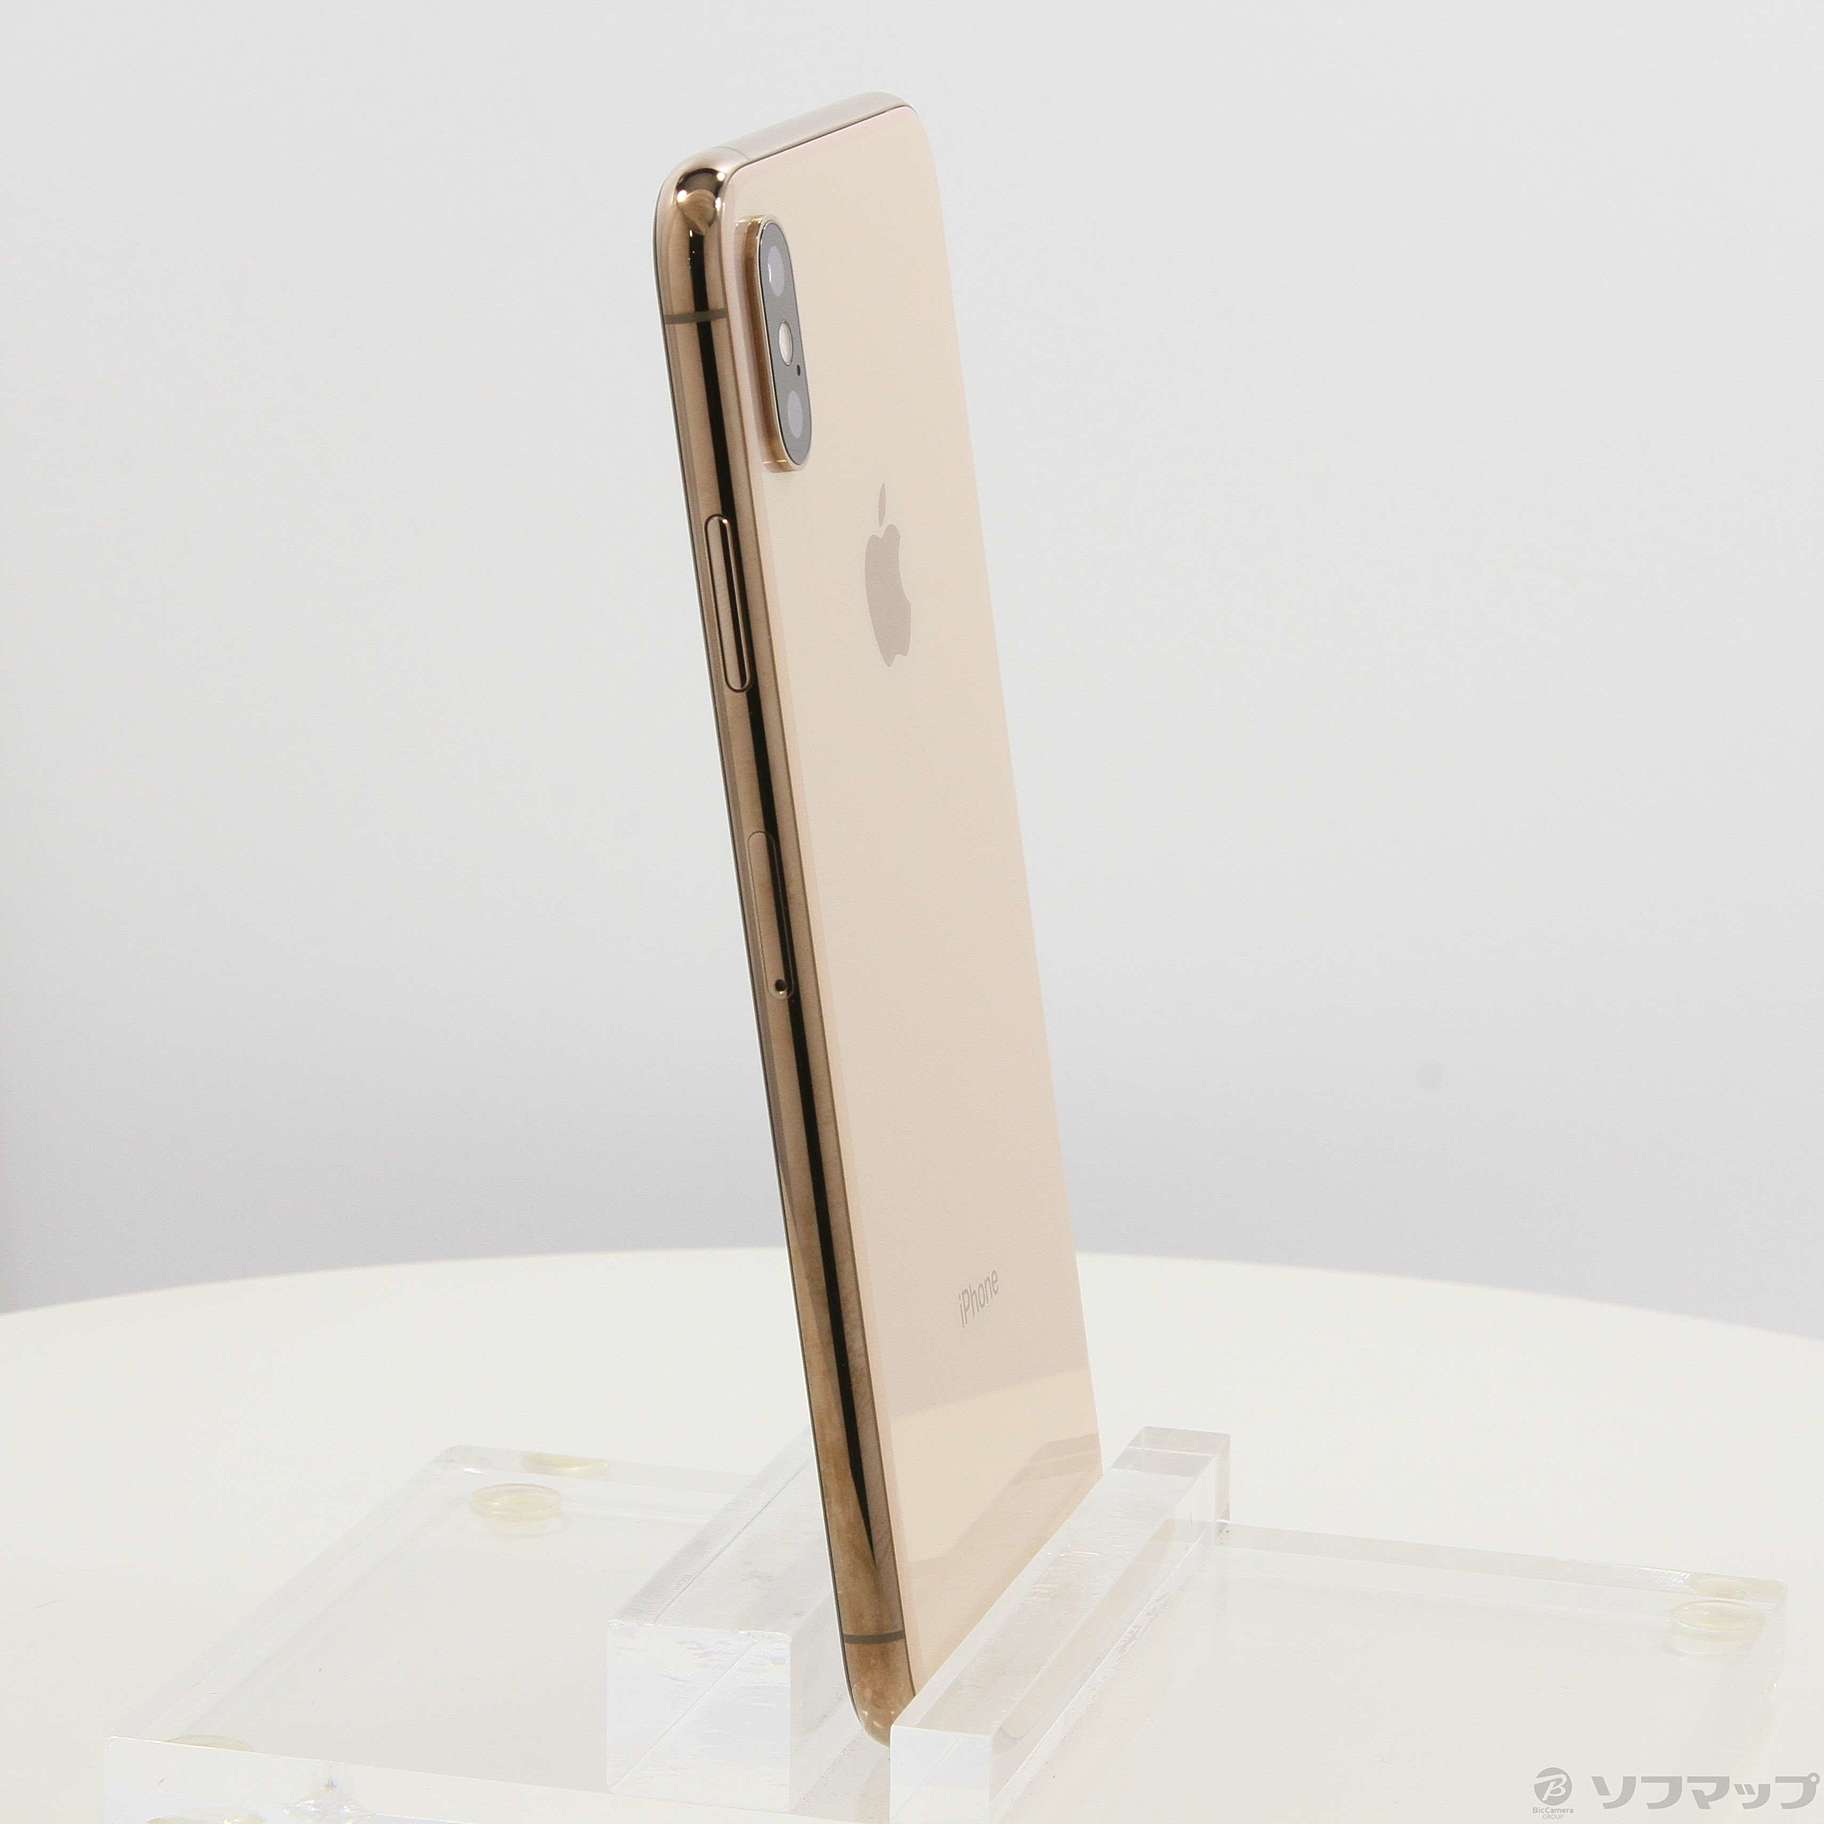 SIMフリー Apple iPhoneXS Max 64GB ゴールド